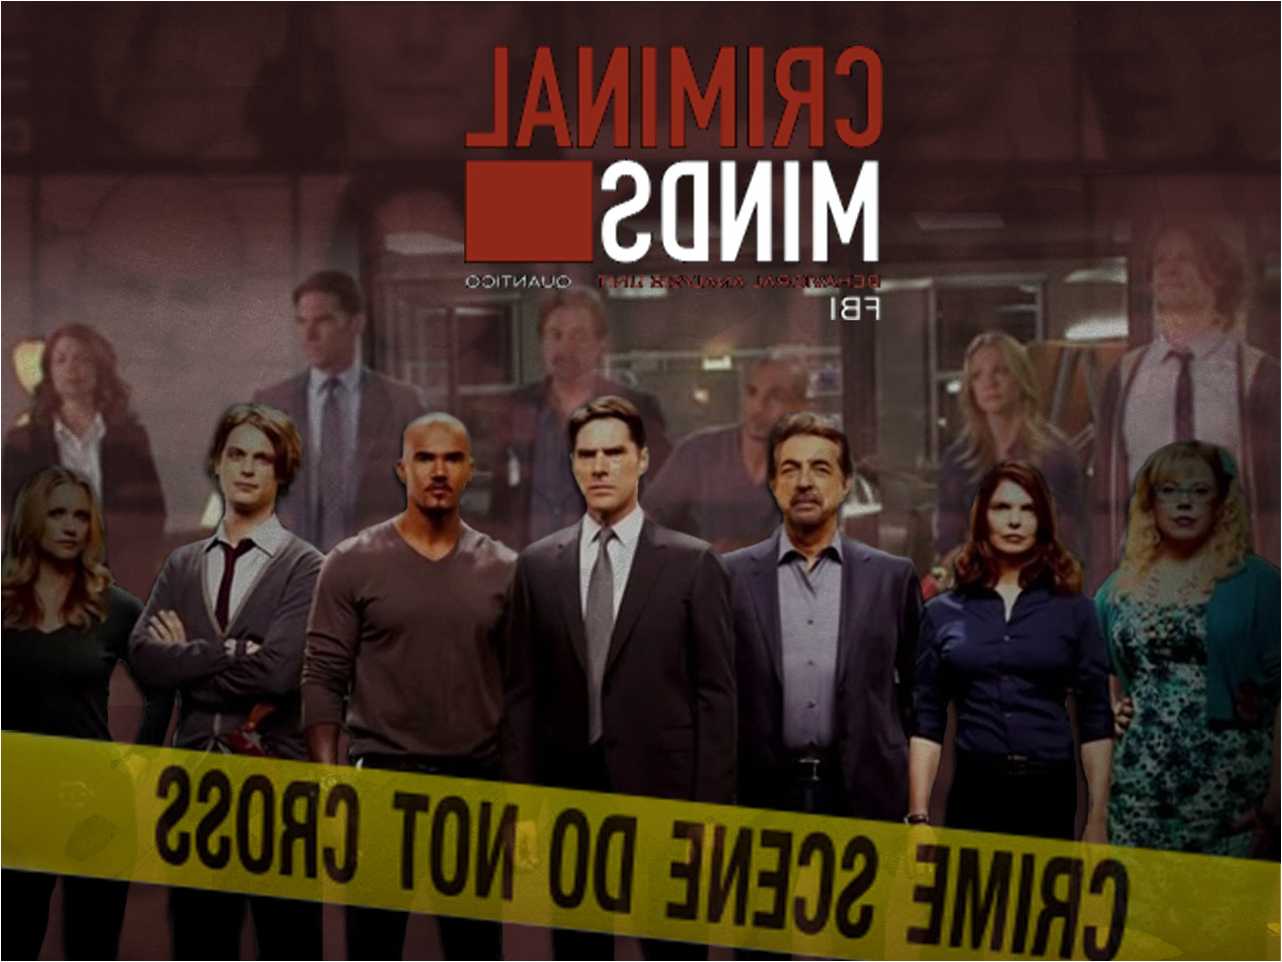 Criminal Minds Wallpaper, HD Criminal Minds Wallpaper